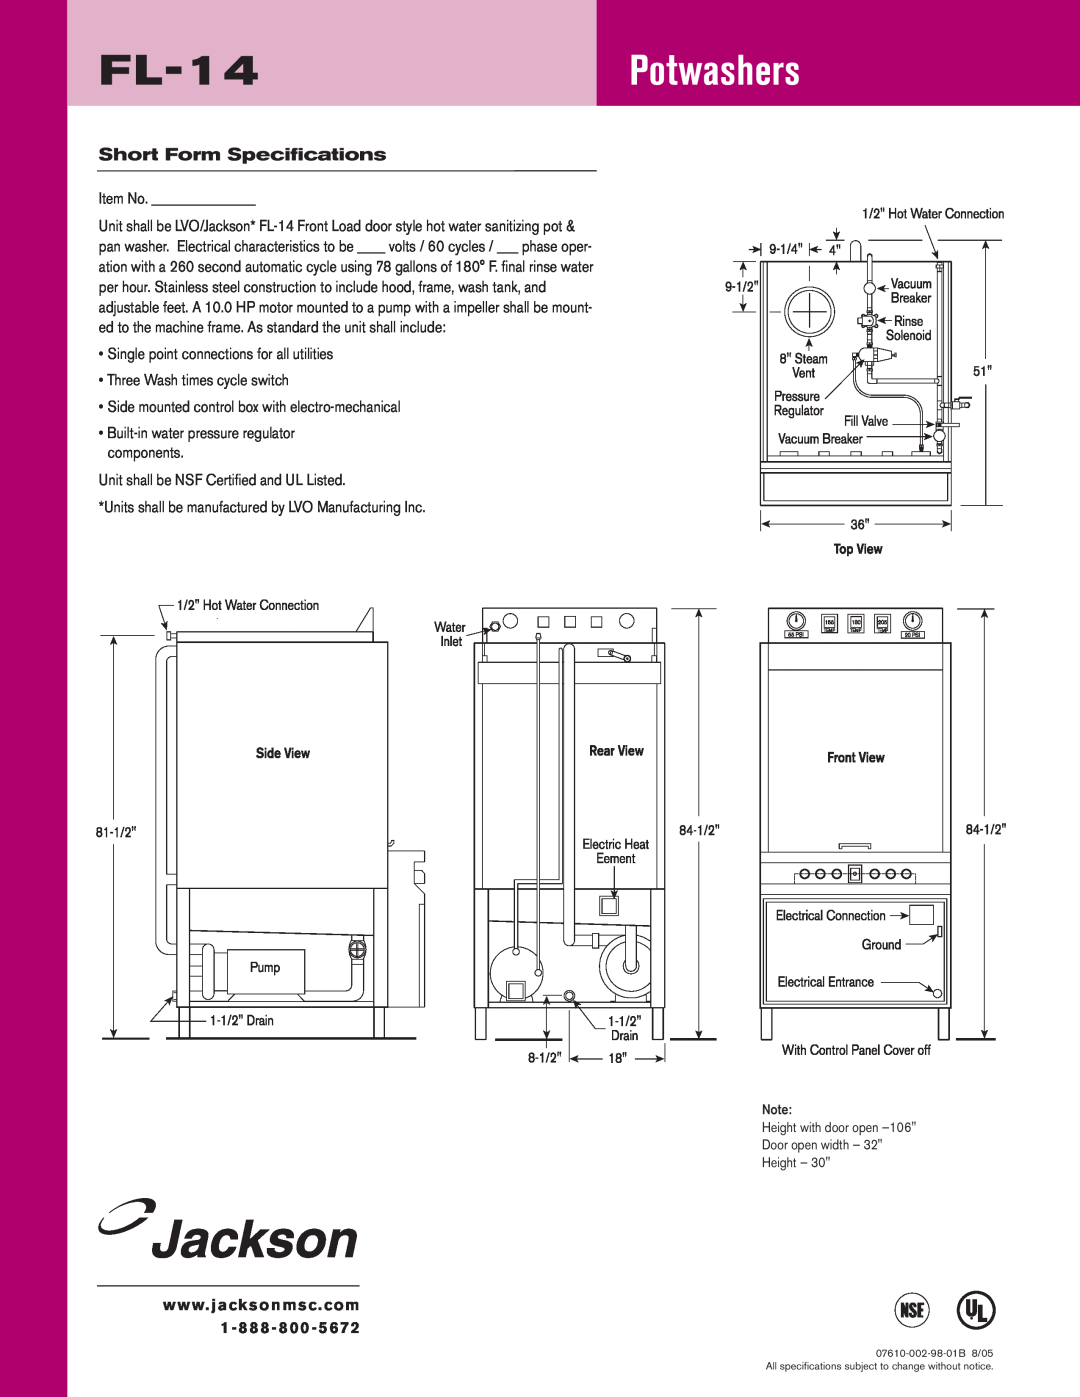 Jackson dimensions Short Form Specifications, FL-14Potwashers 